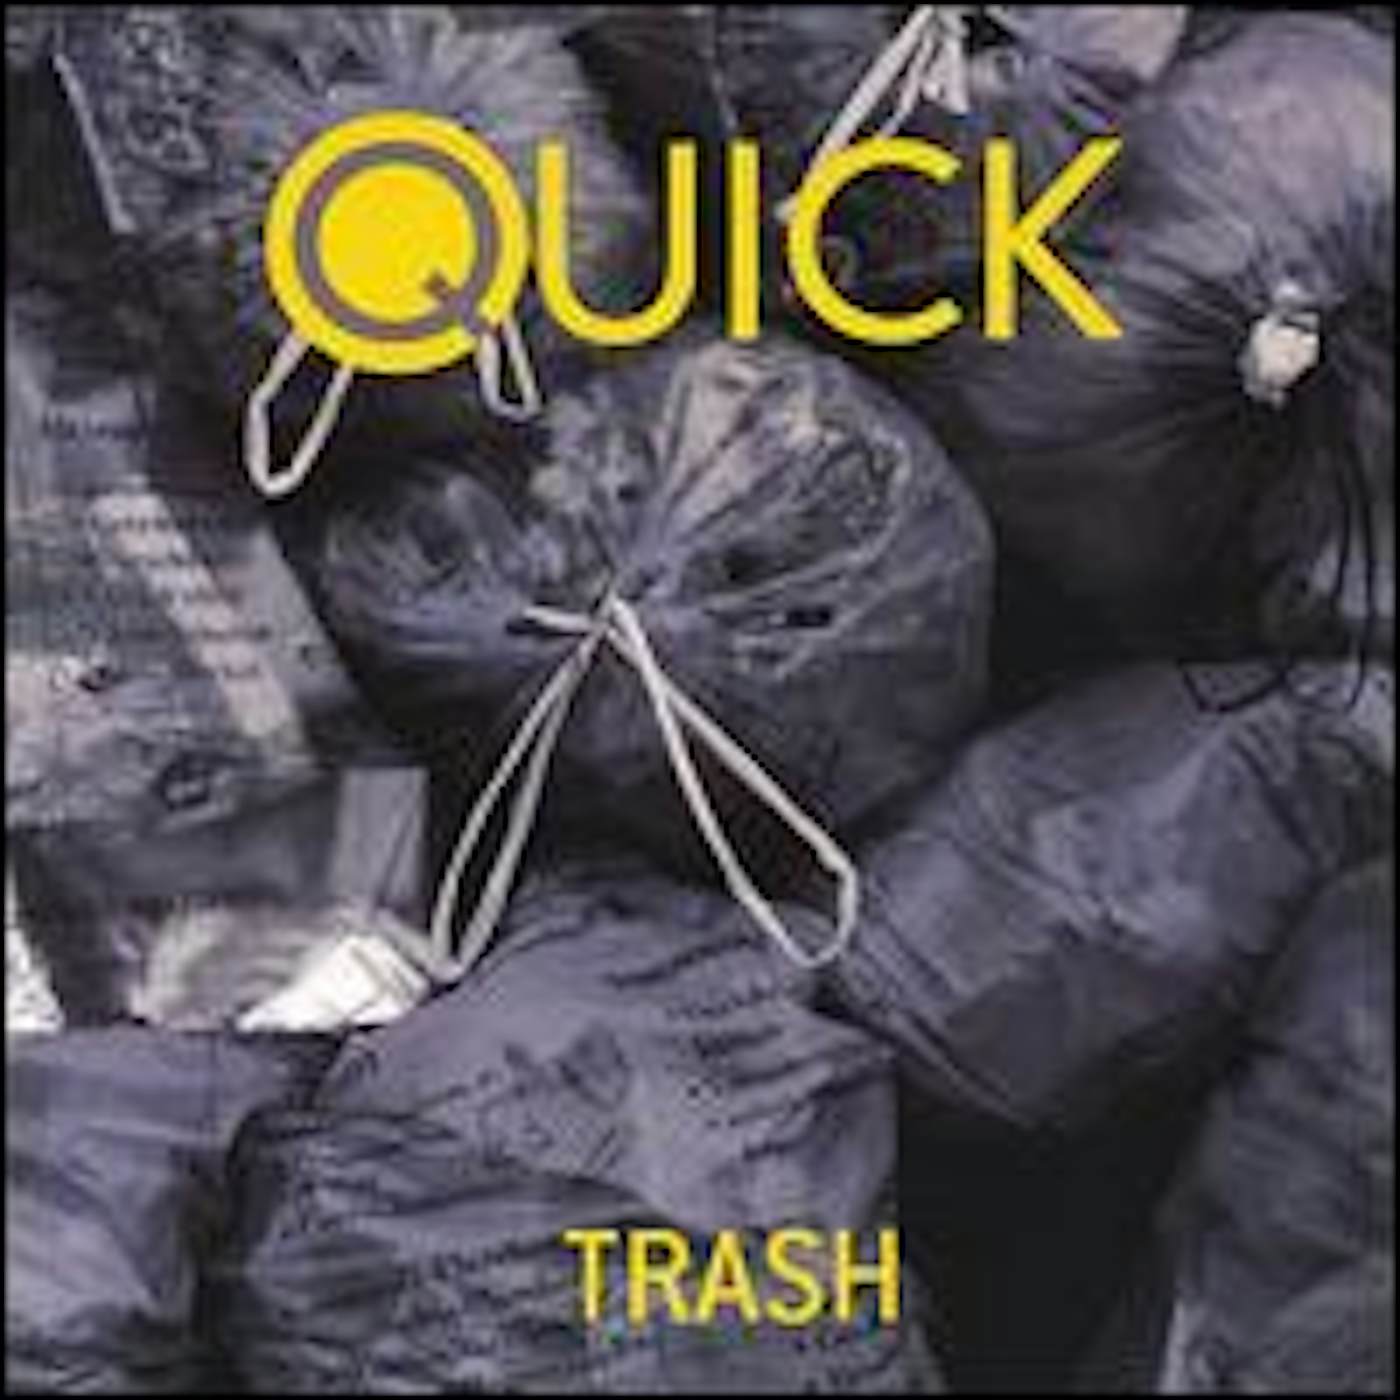 Quick TRASH CD